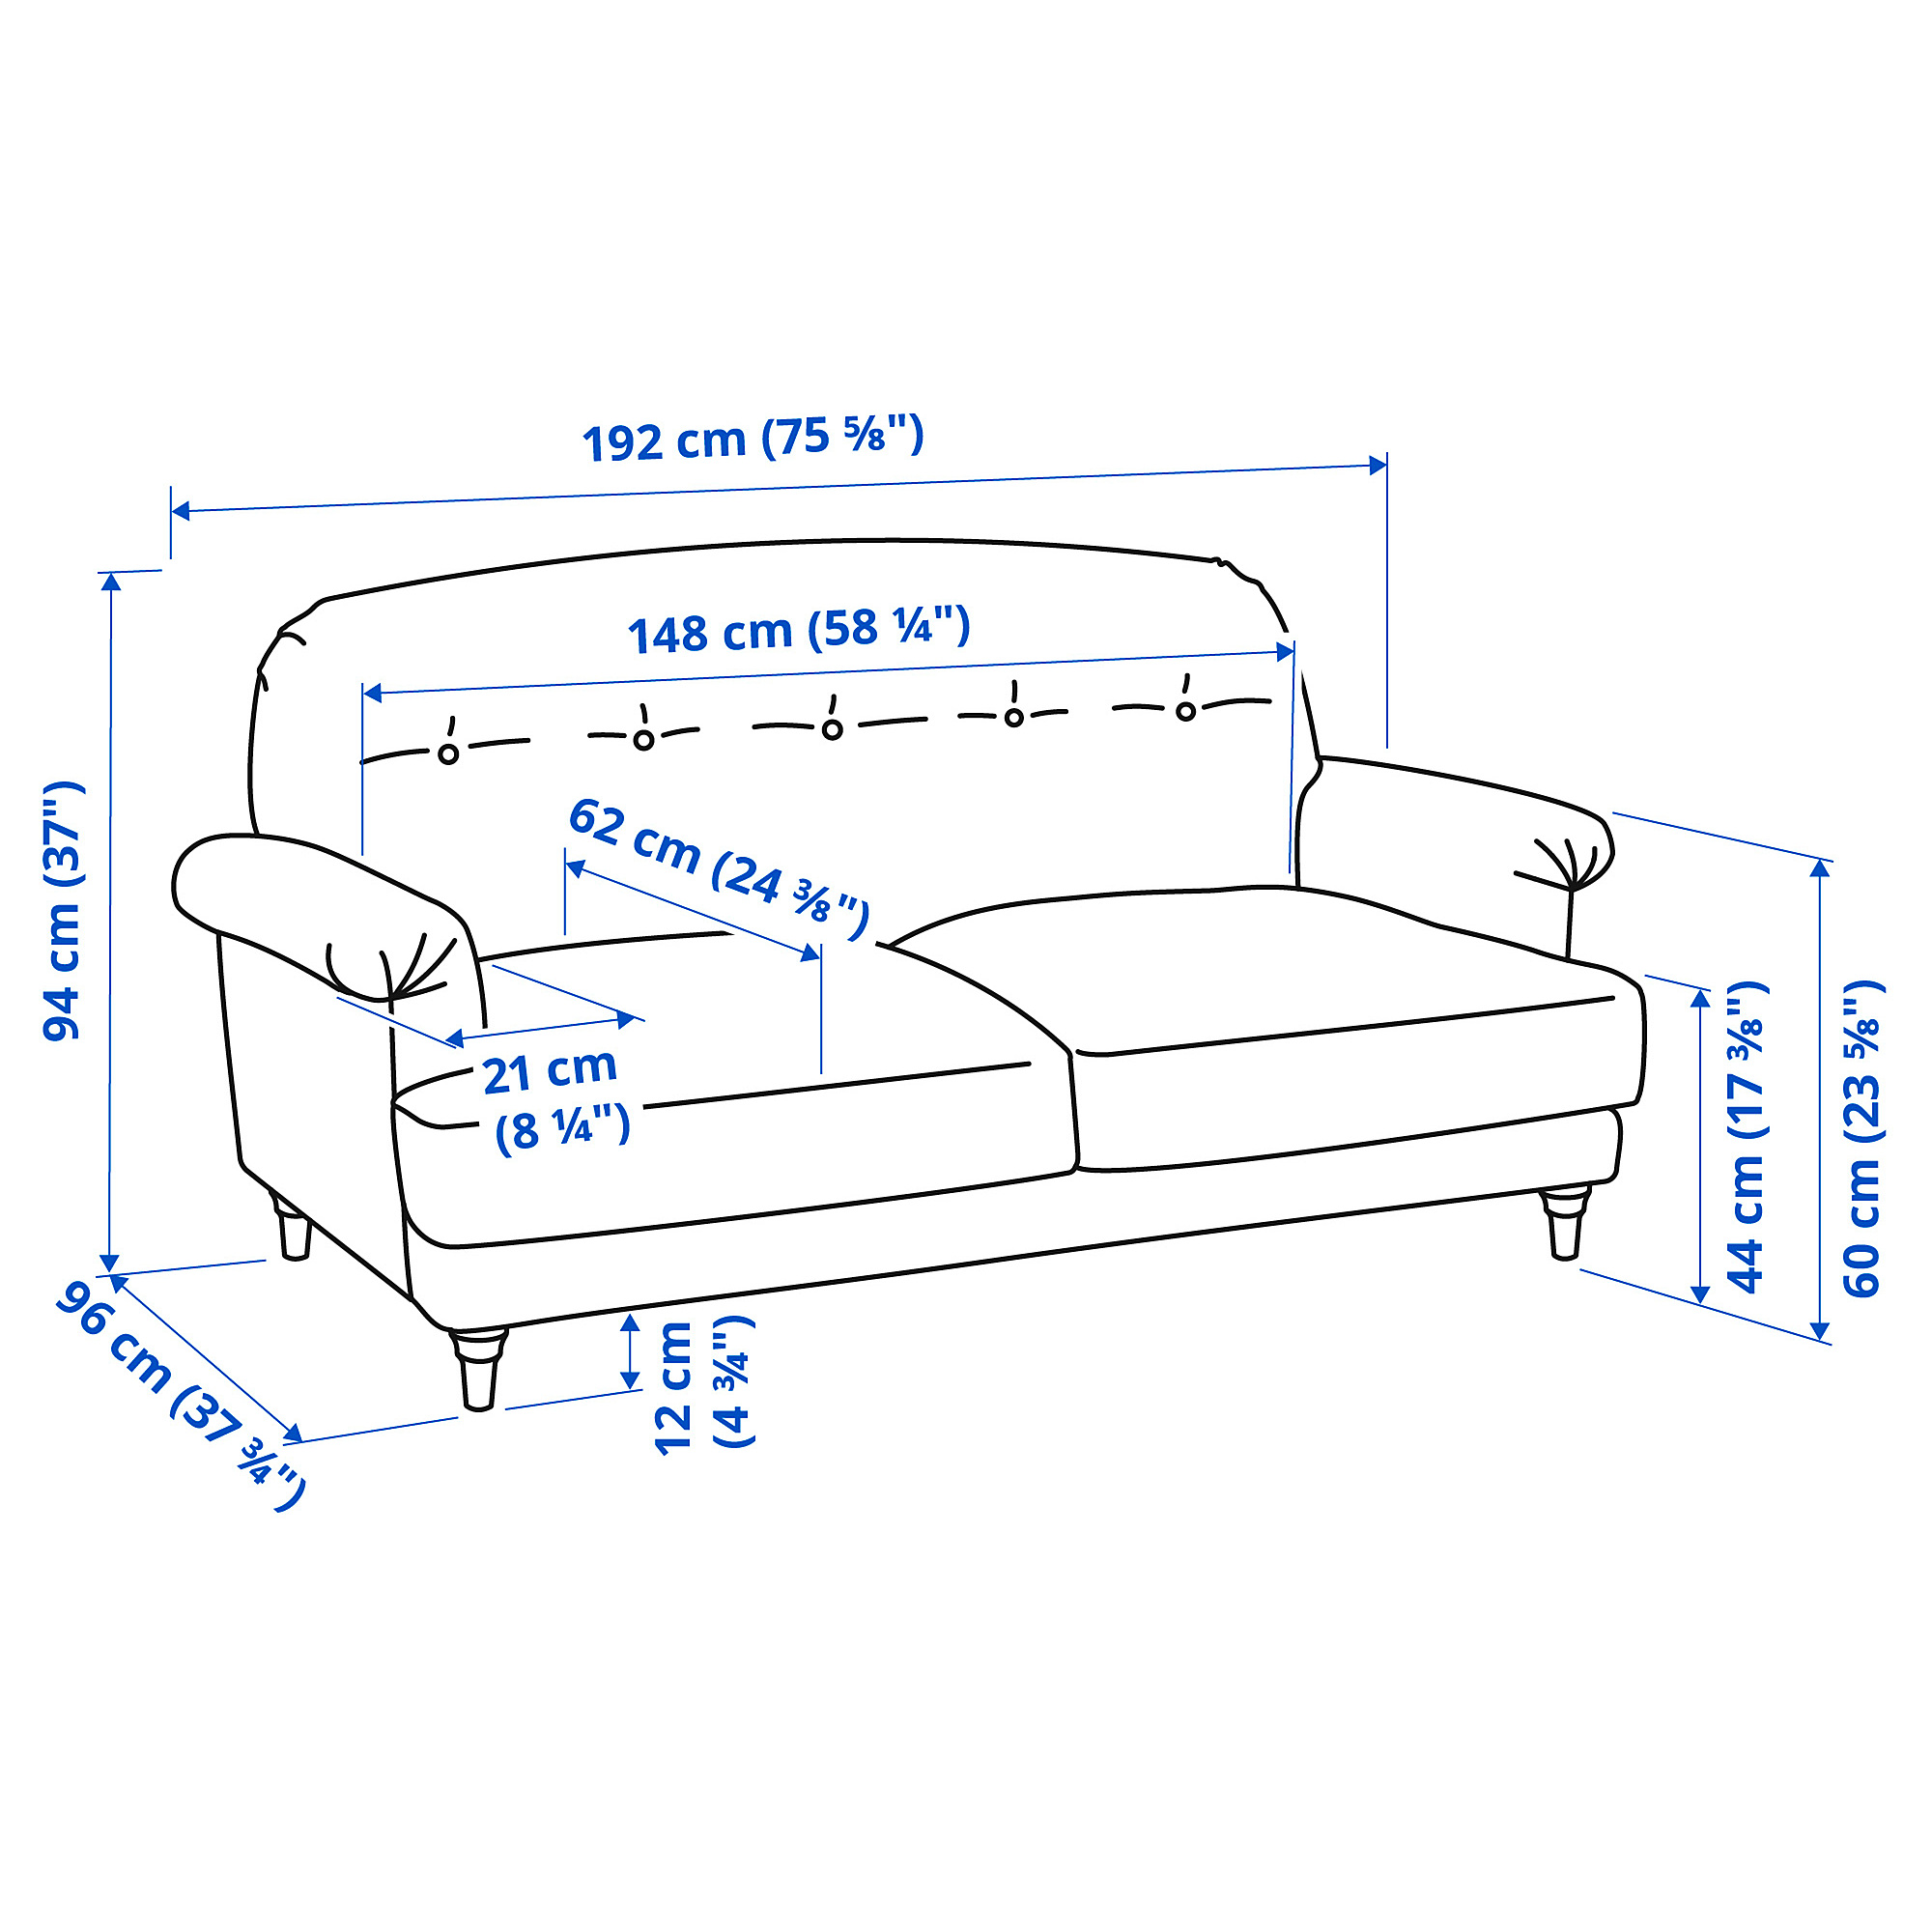 ESSEBODA 2-seat sofa